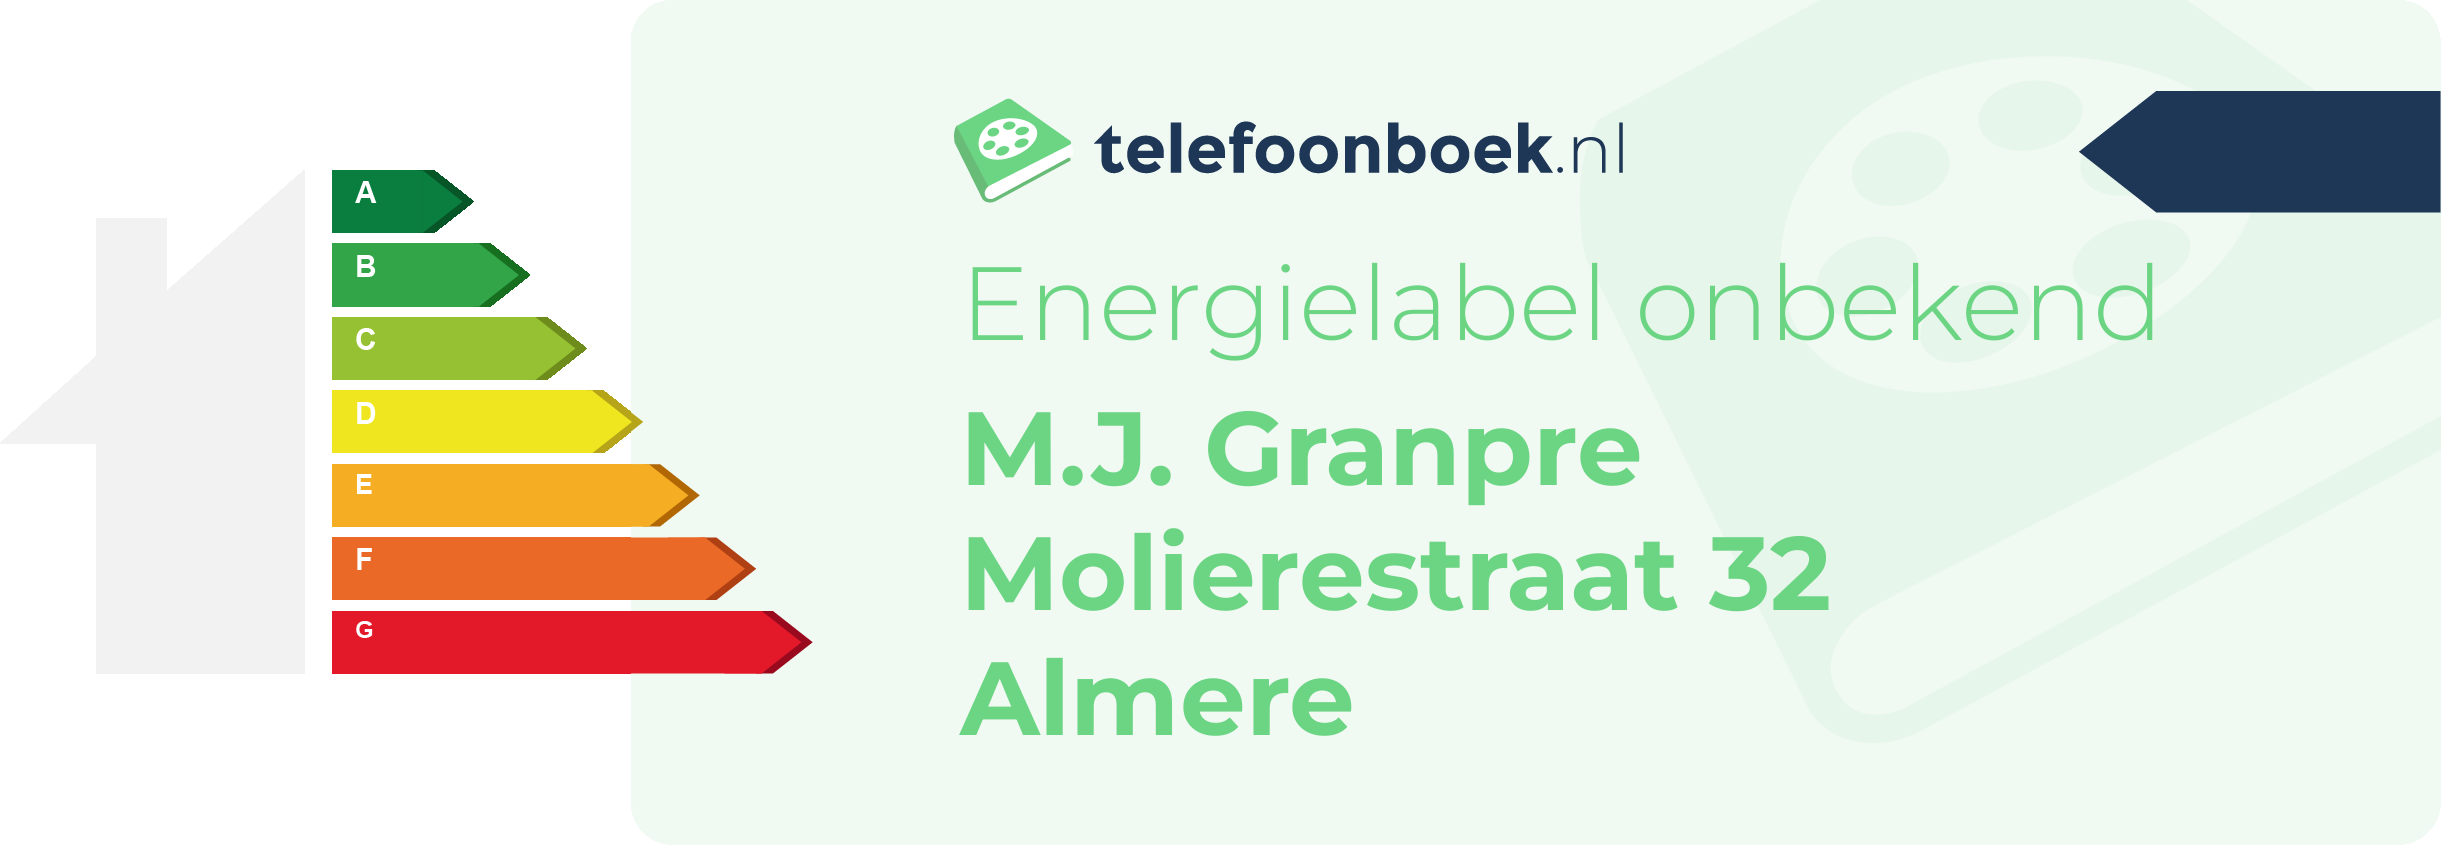 Energielabel M.J. Granpre Molierestraat 32 Almere